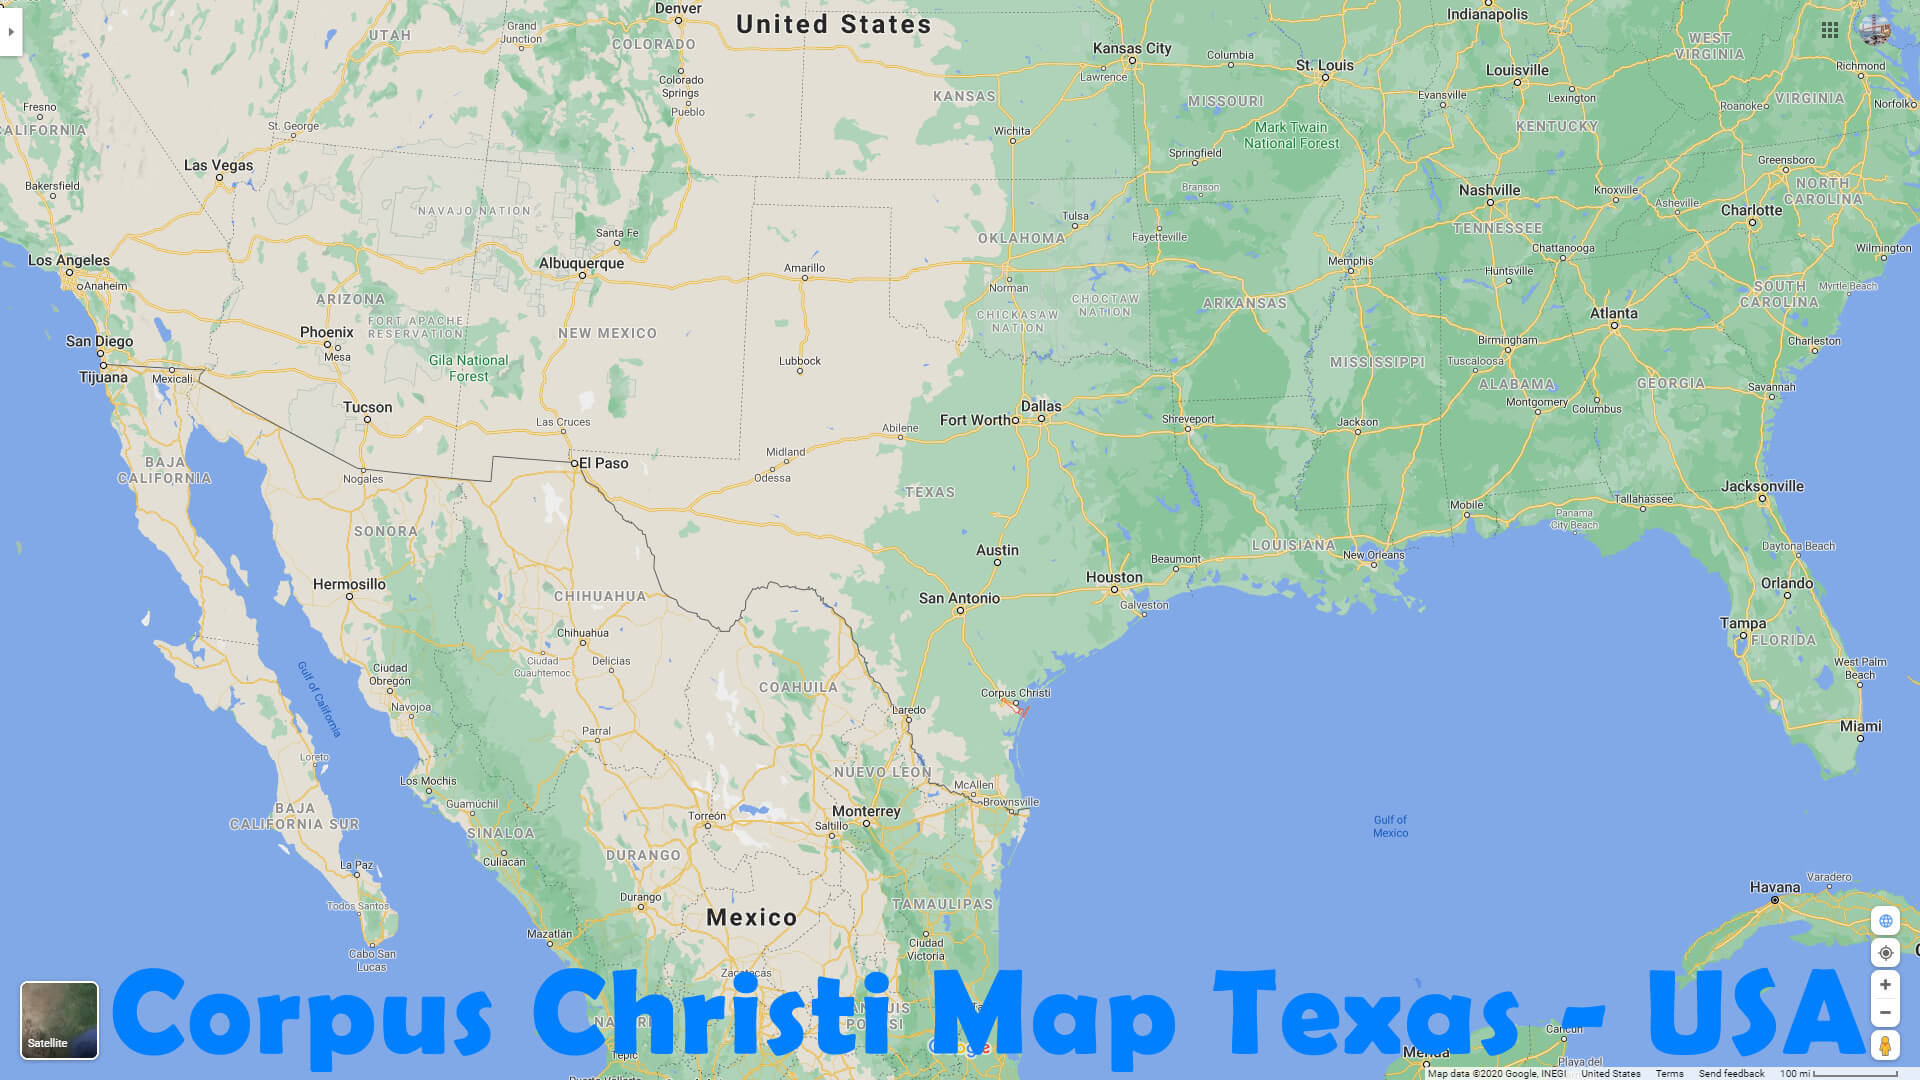 Corpus Christi Map Texas   USA